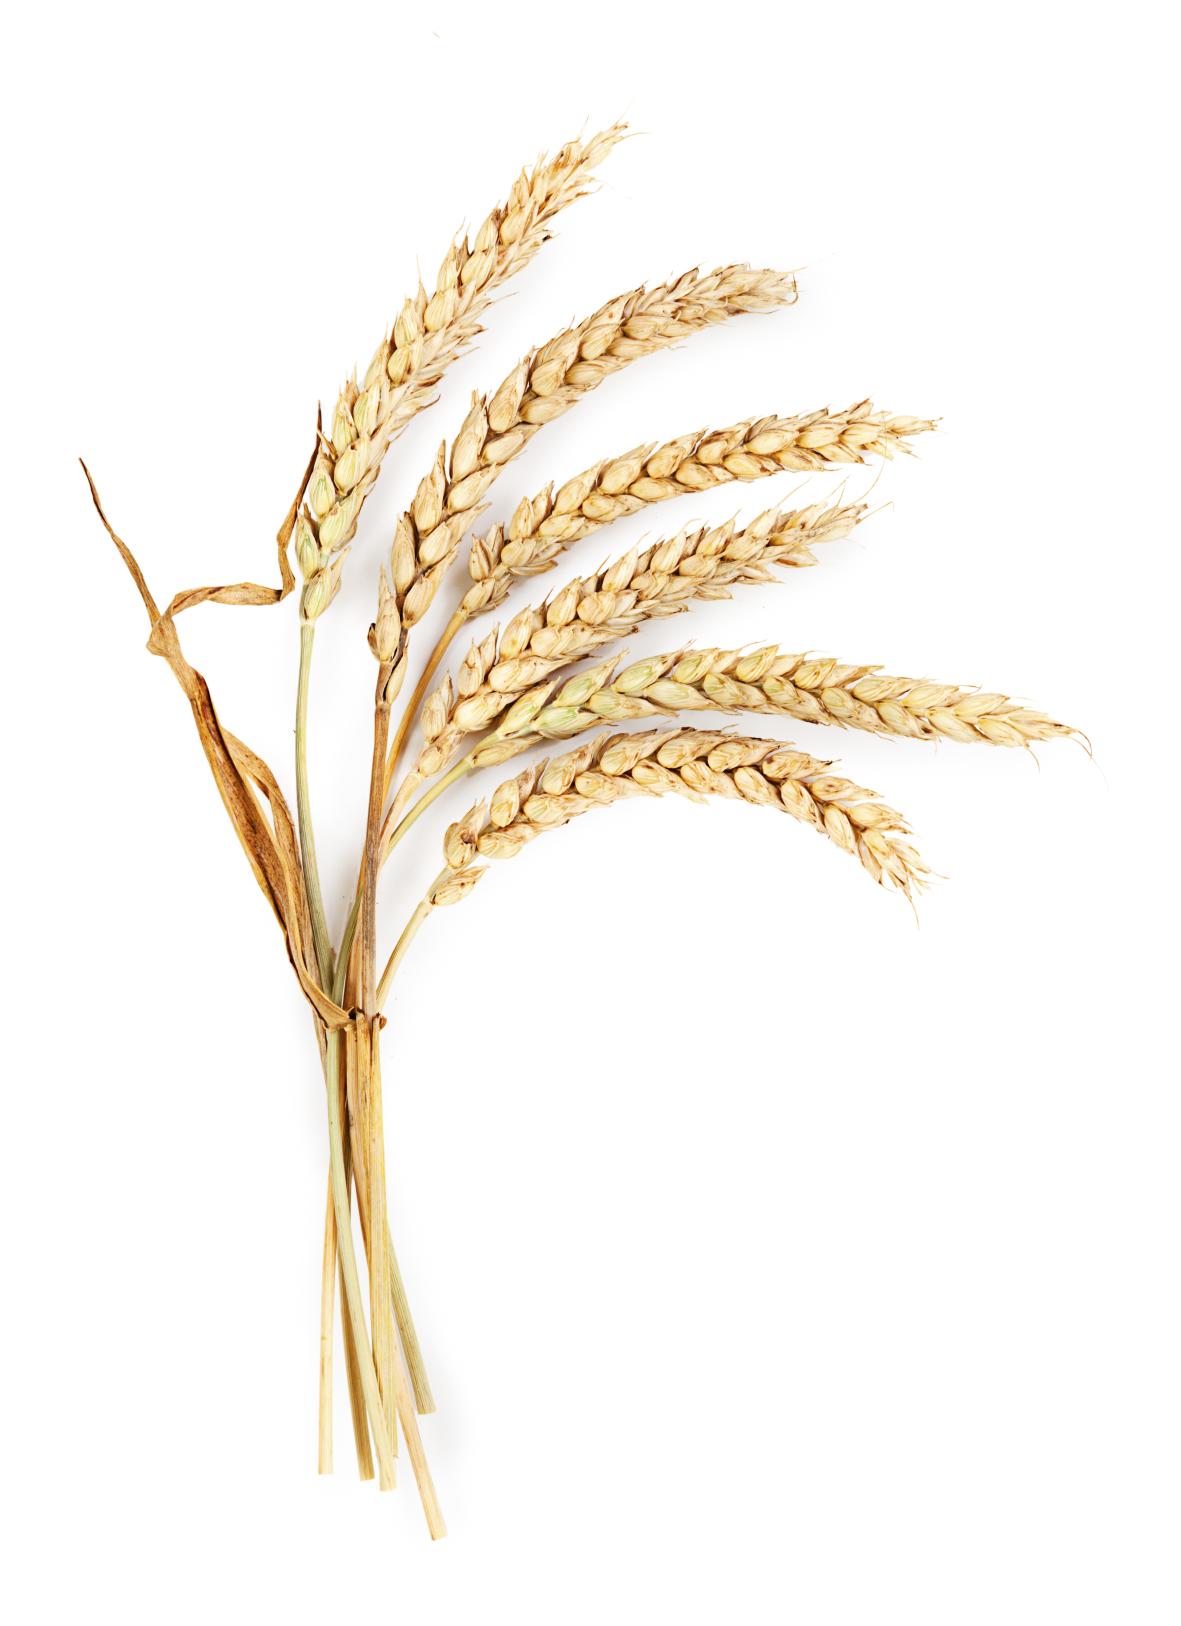 Wheat to flour information sheet | Grainchain